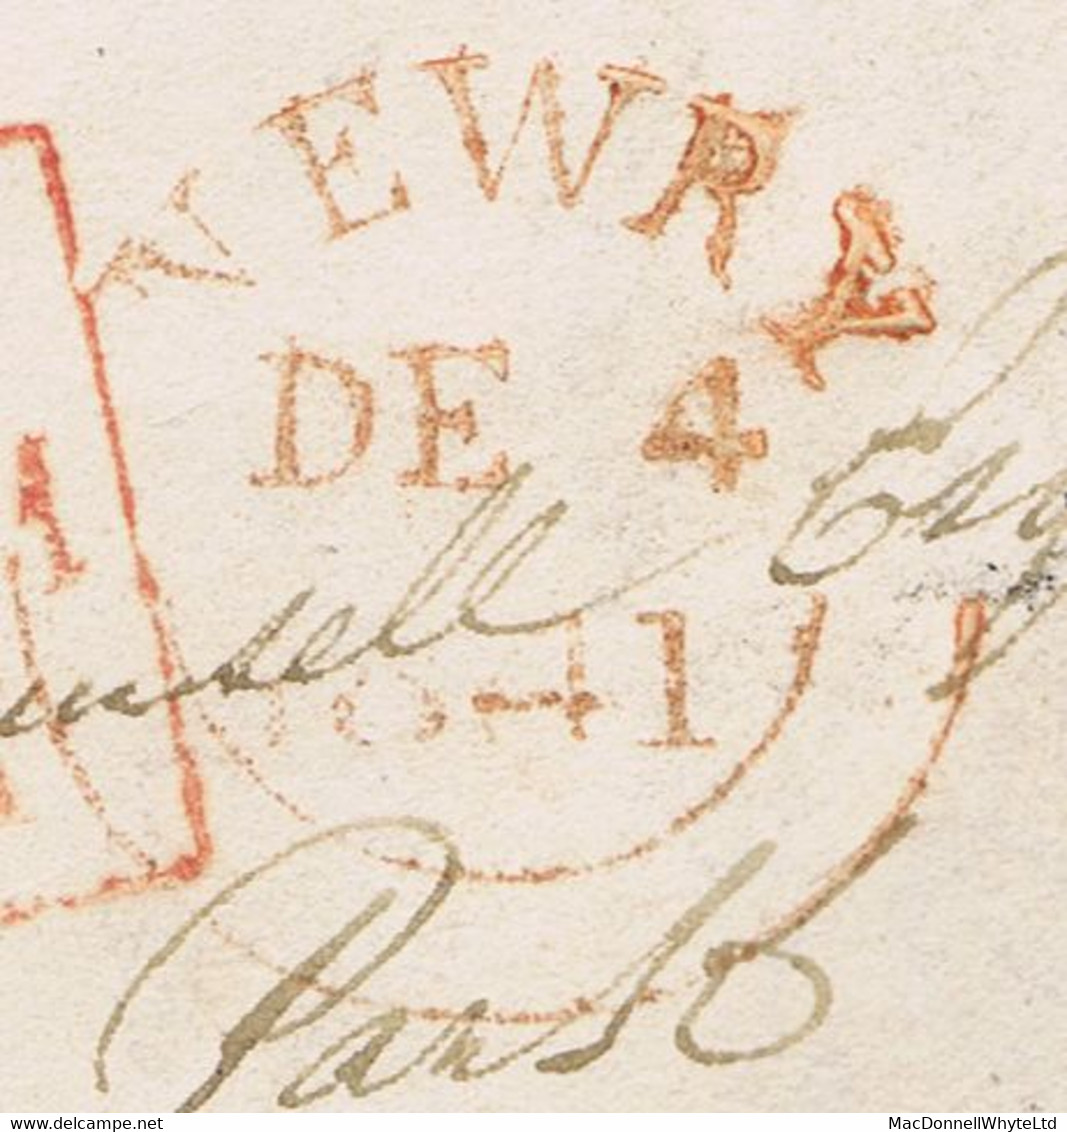 Ireland Down Uniform Penny Post Rate 1841 Letter To Celbridge Prepaid "1" With Red NEWRY DE 4 1841 Cds - Prefilatelia